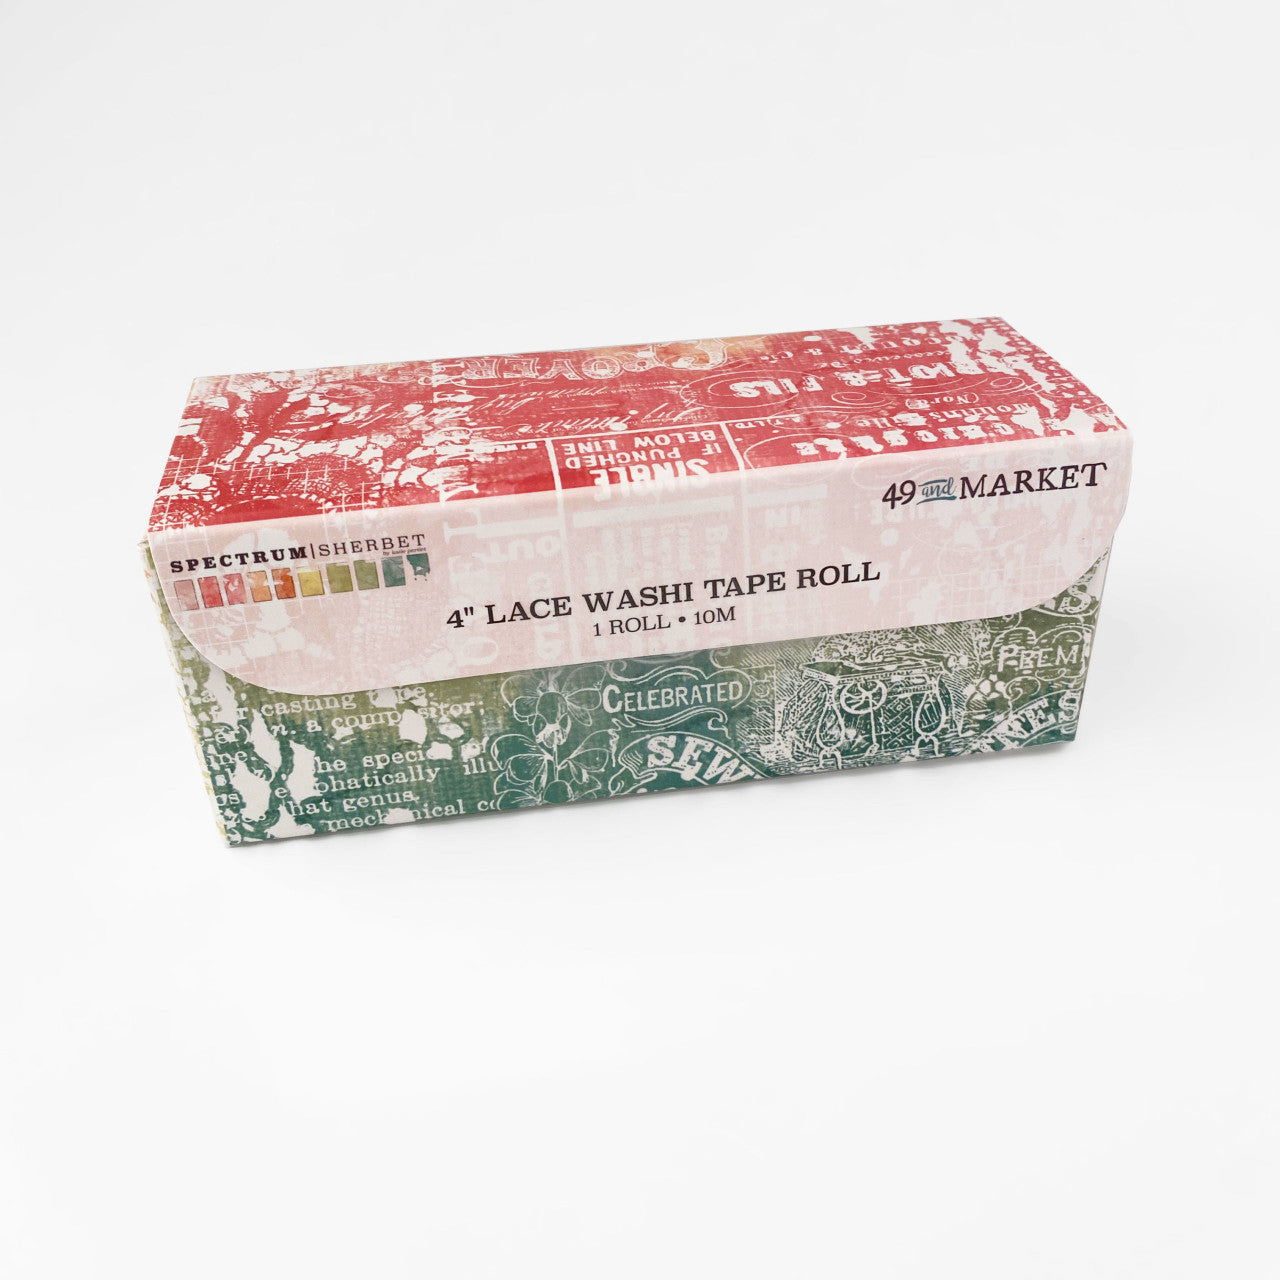 49 & Market Spectrum Sherbet - 4” Lace Washi Tape Roll